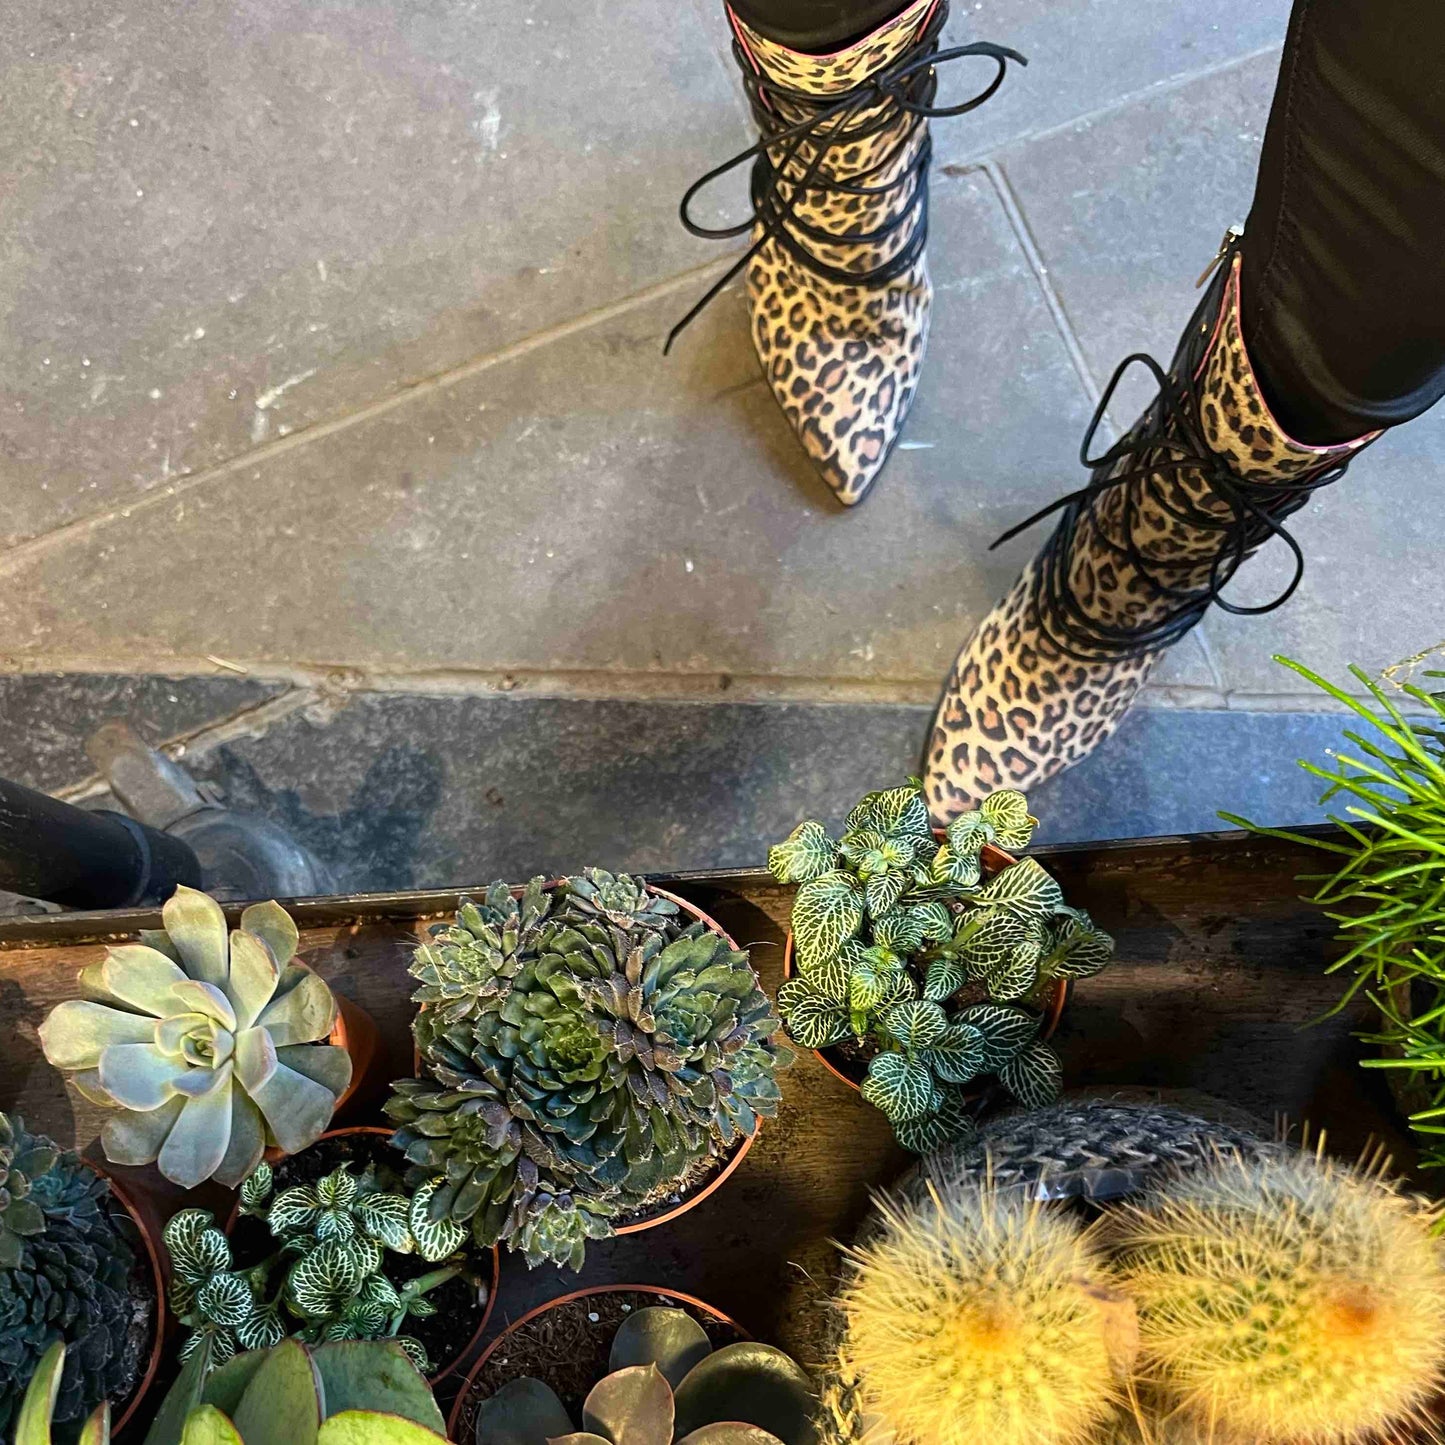 Mina - Black leopard ankle heel boot